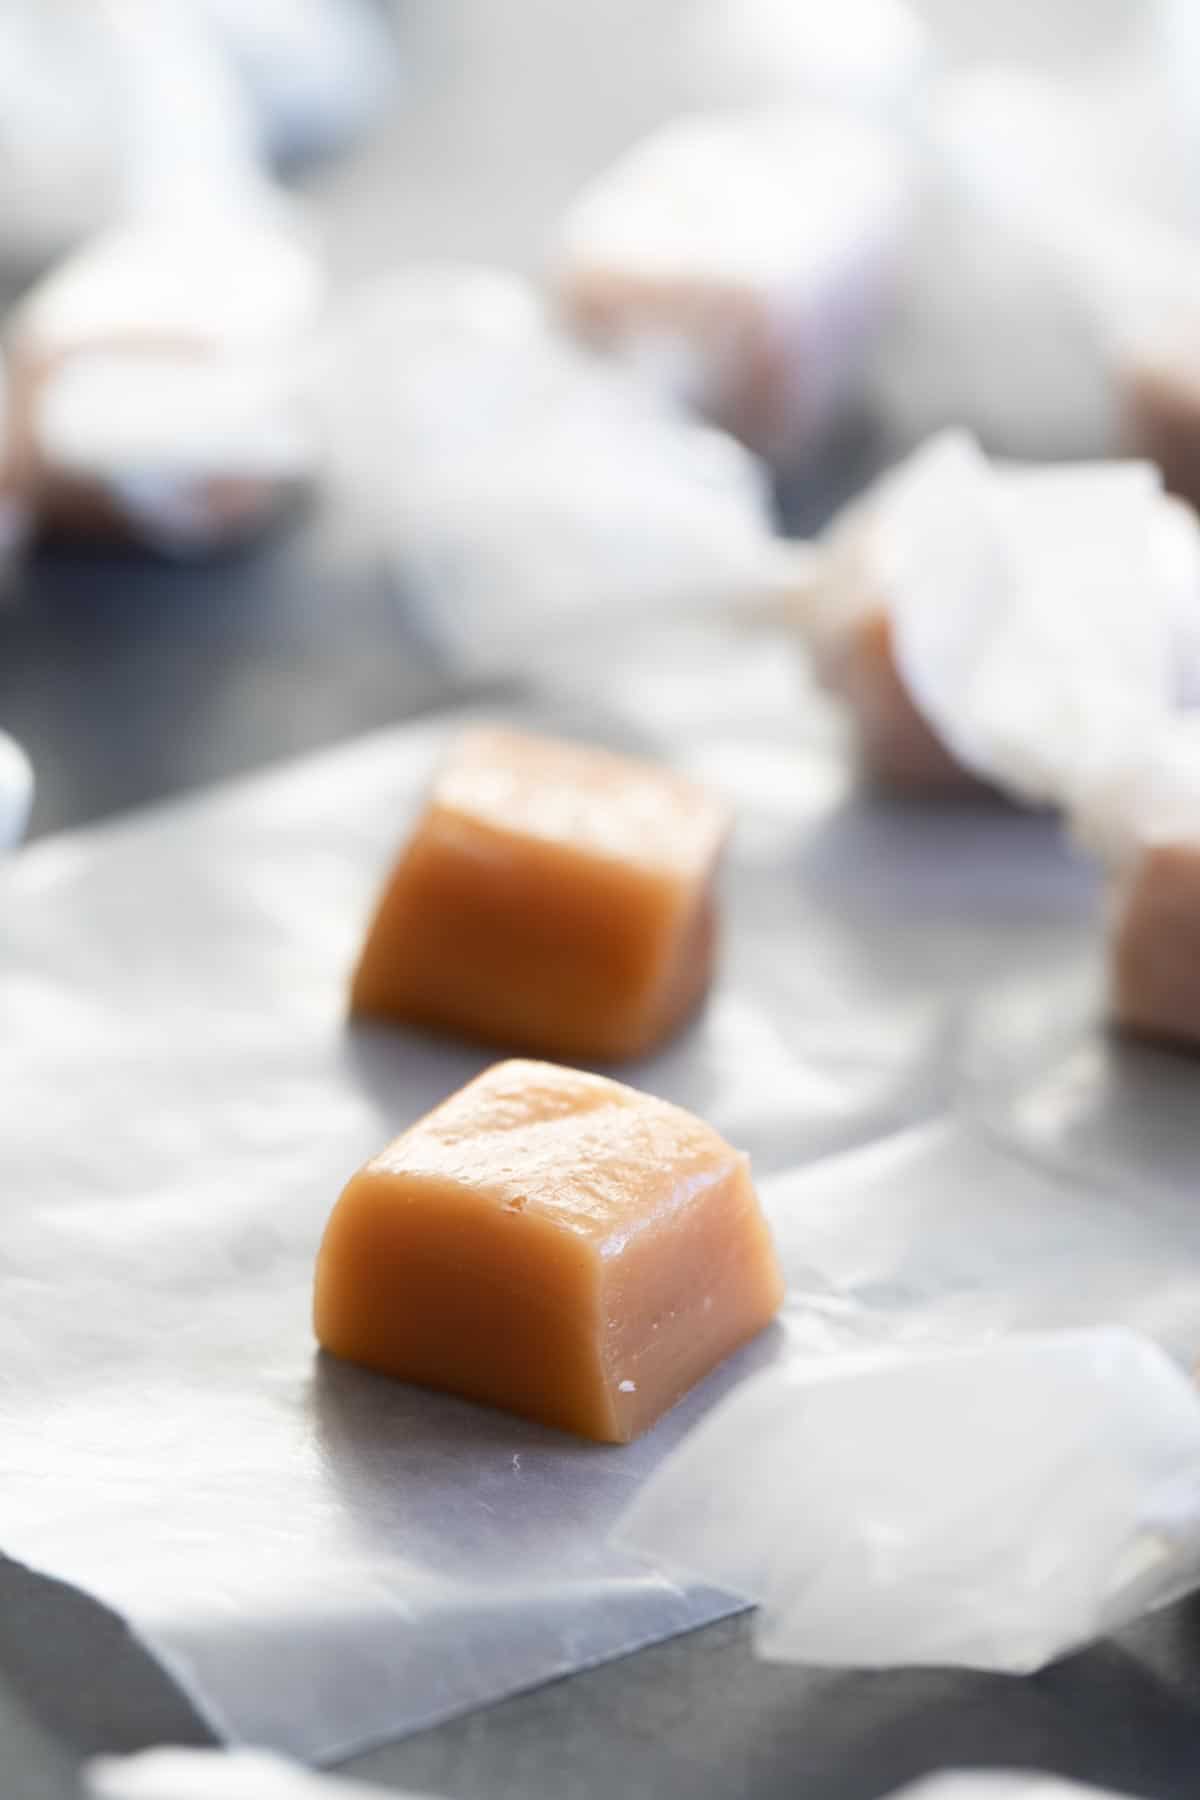 https://www.tasteandtellblog.com/wp-content/uploads/2020/12/Homemade-Caramel-Candy-vertical.jpg